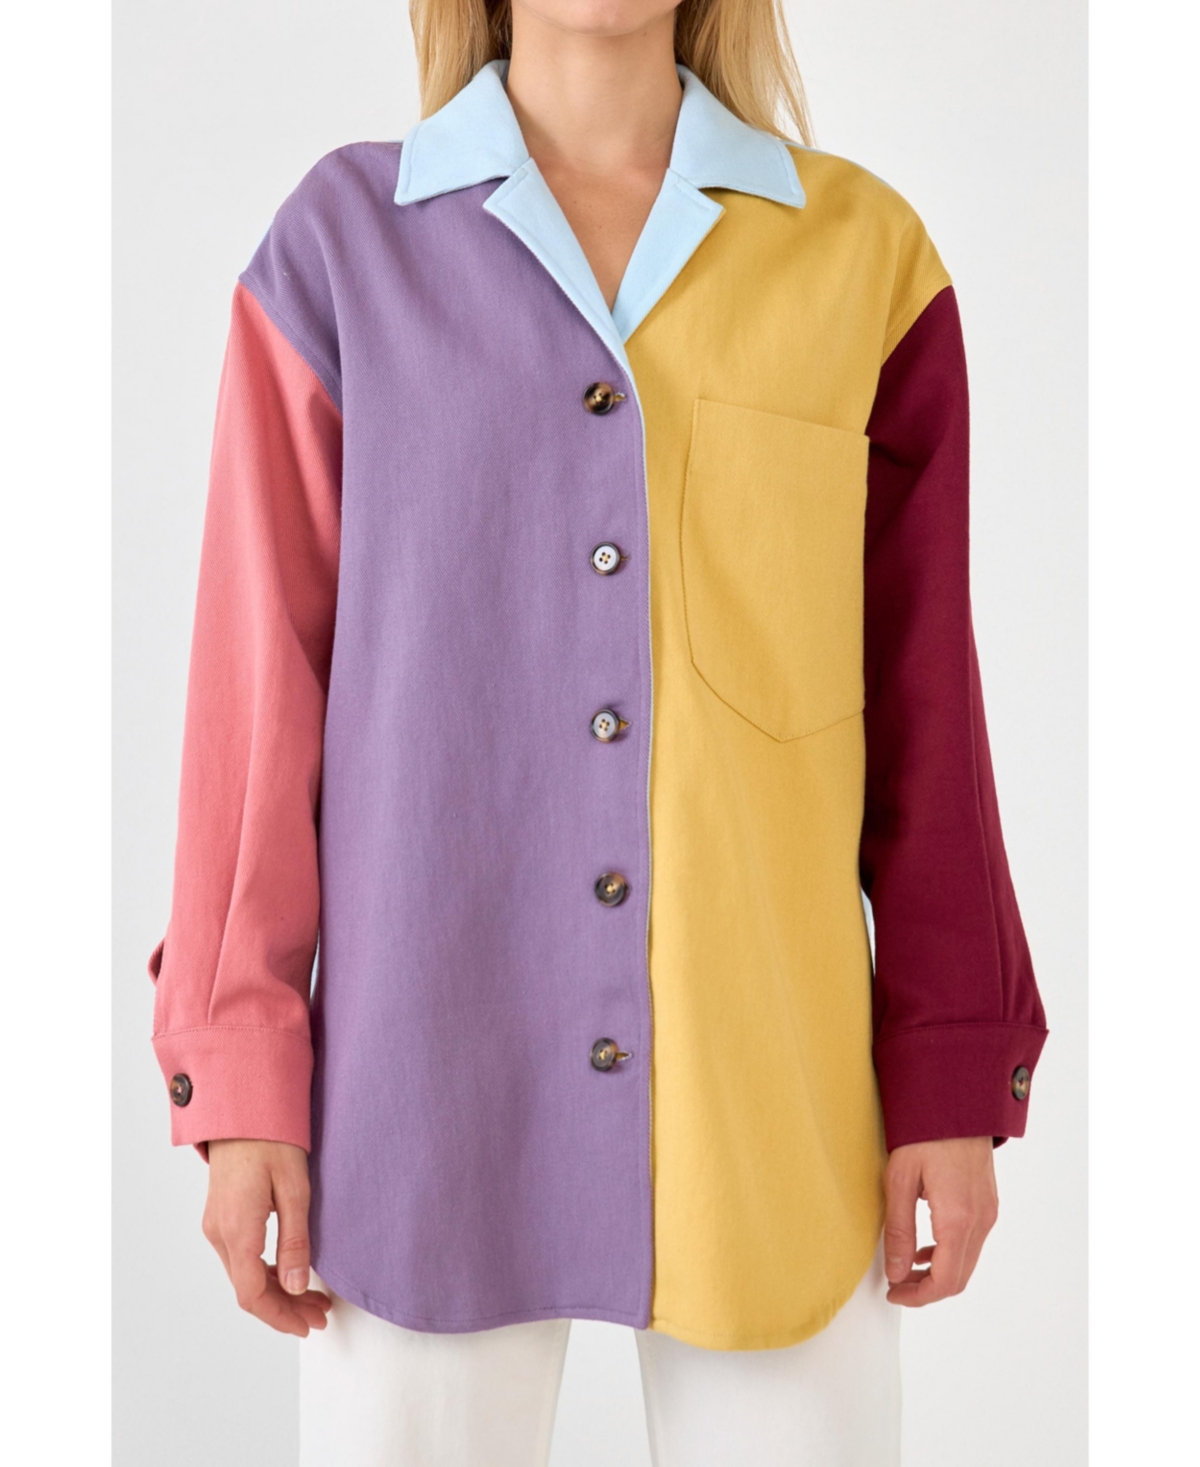 Women's Color Block Shirts Jacket - Multi